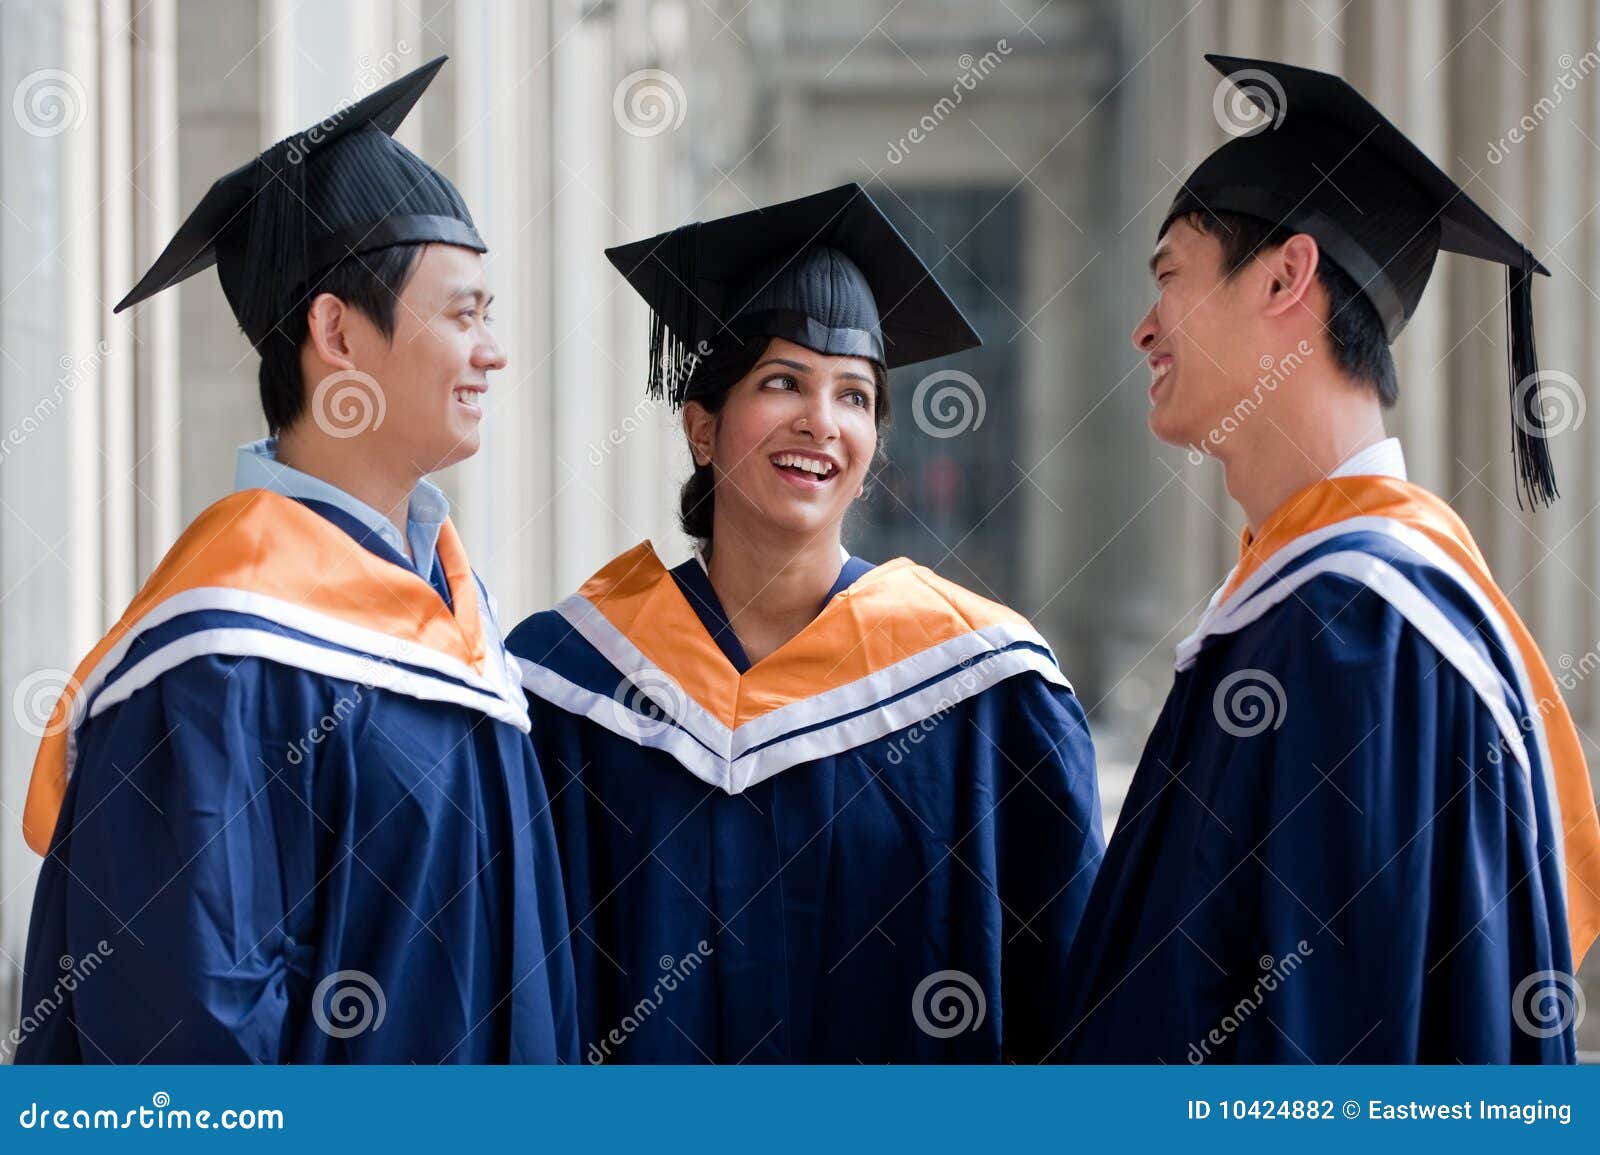 graduates chatting